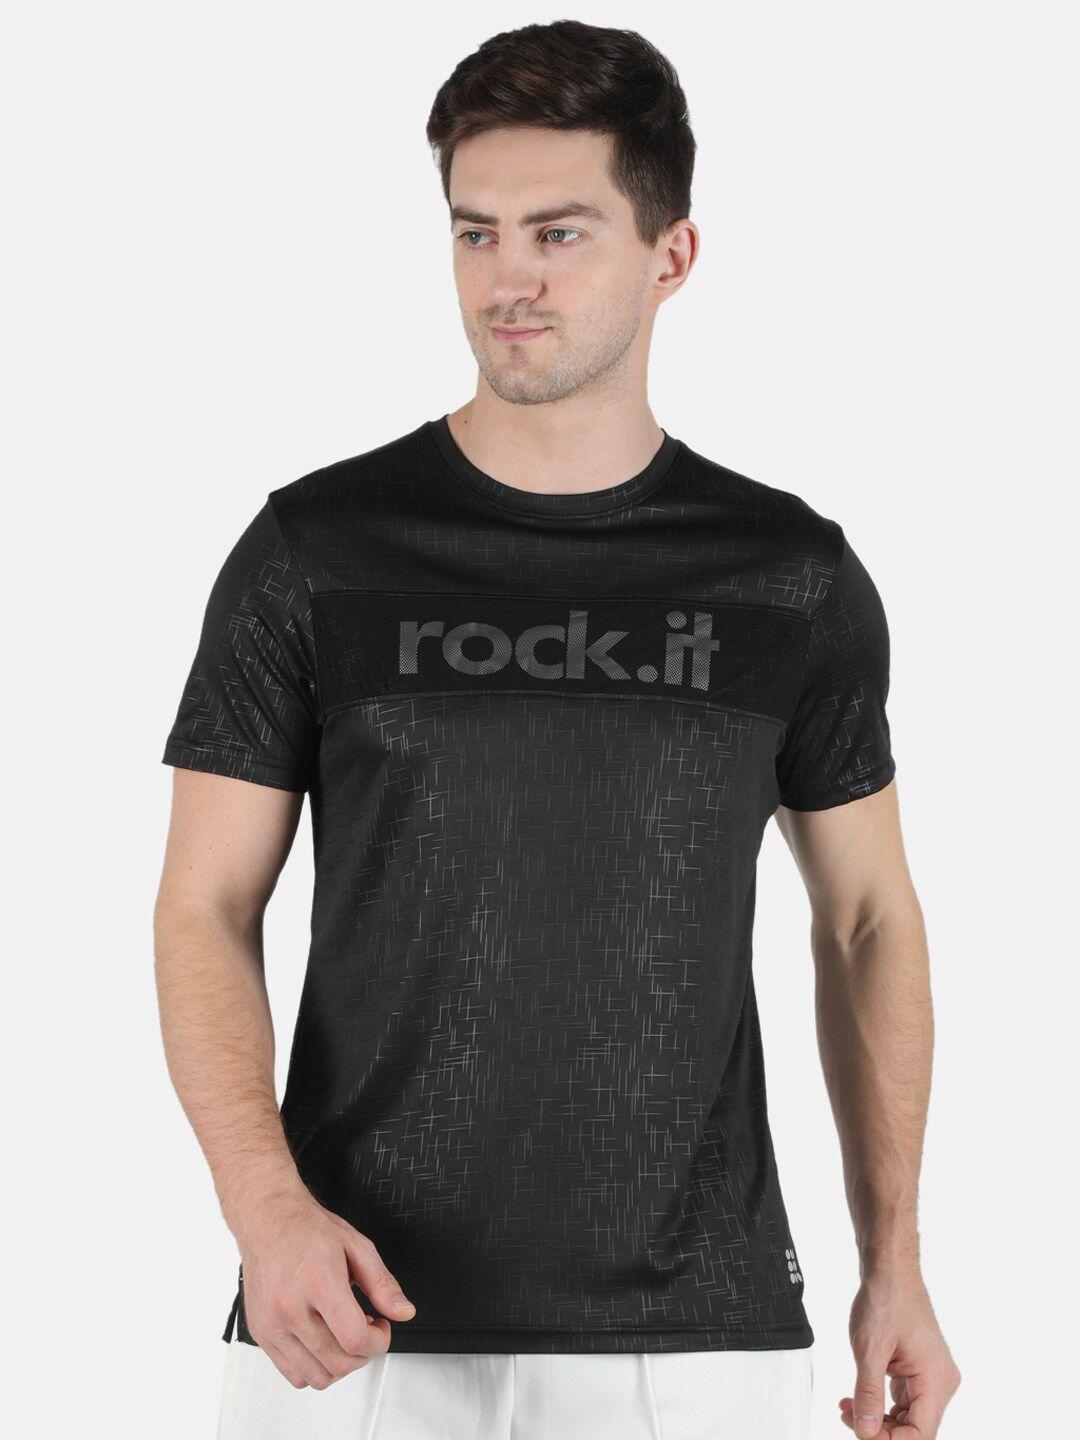 rock-it-men-black-typography-printed-applique-training-or-gym-t-shirt